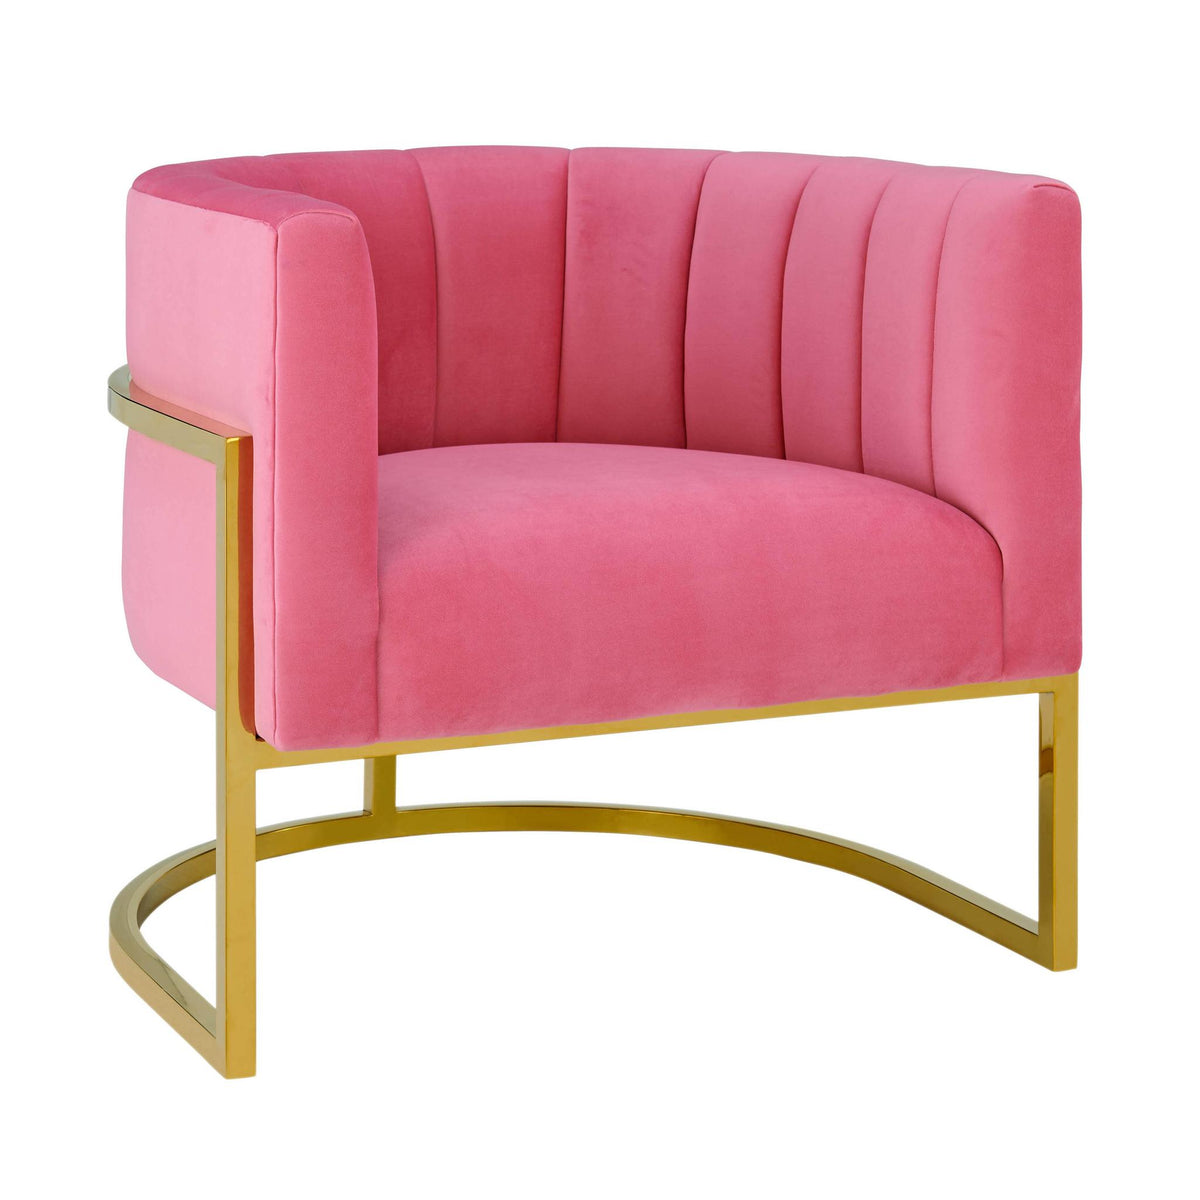 TOV Furniture Modern Magnolia Rose Pink Velvet Chair - TOV-S6427